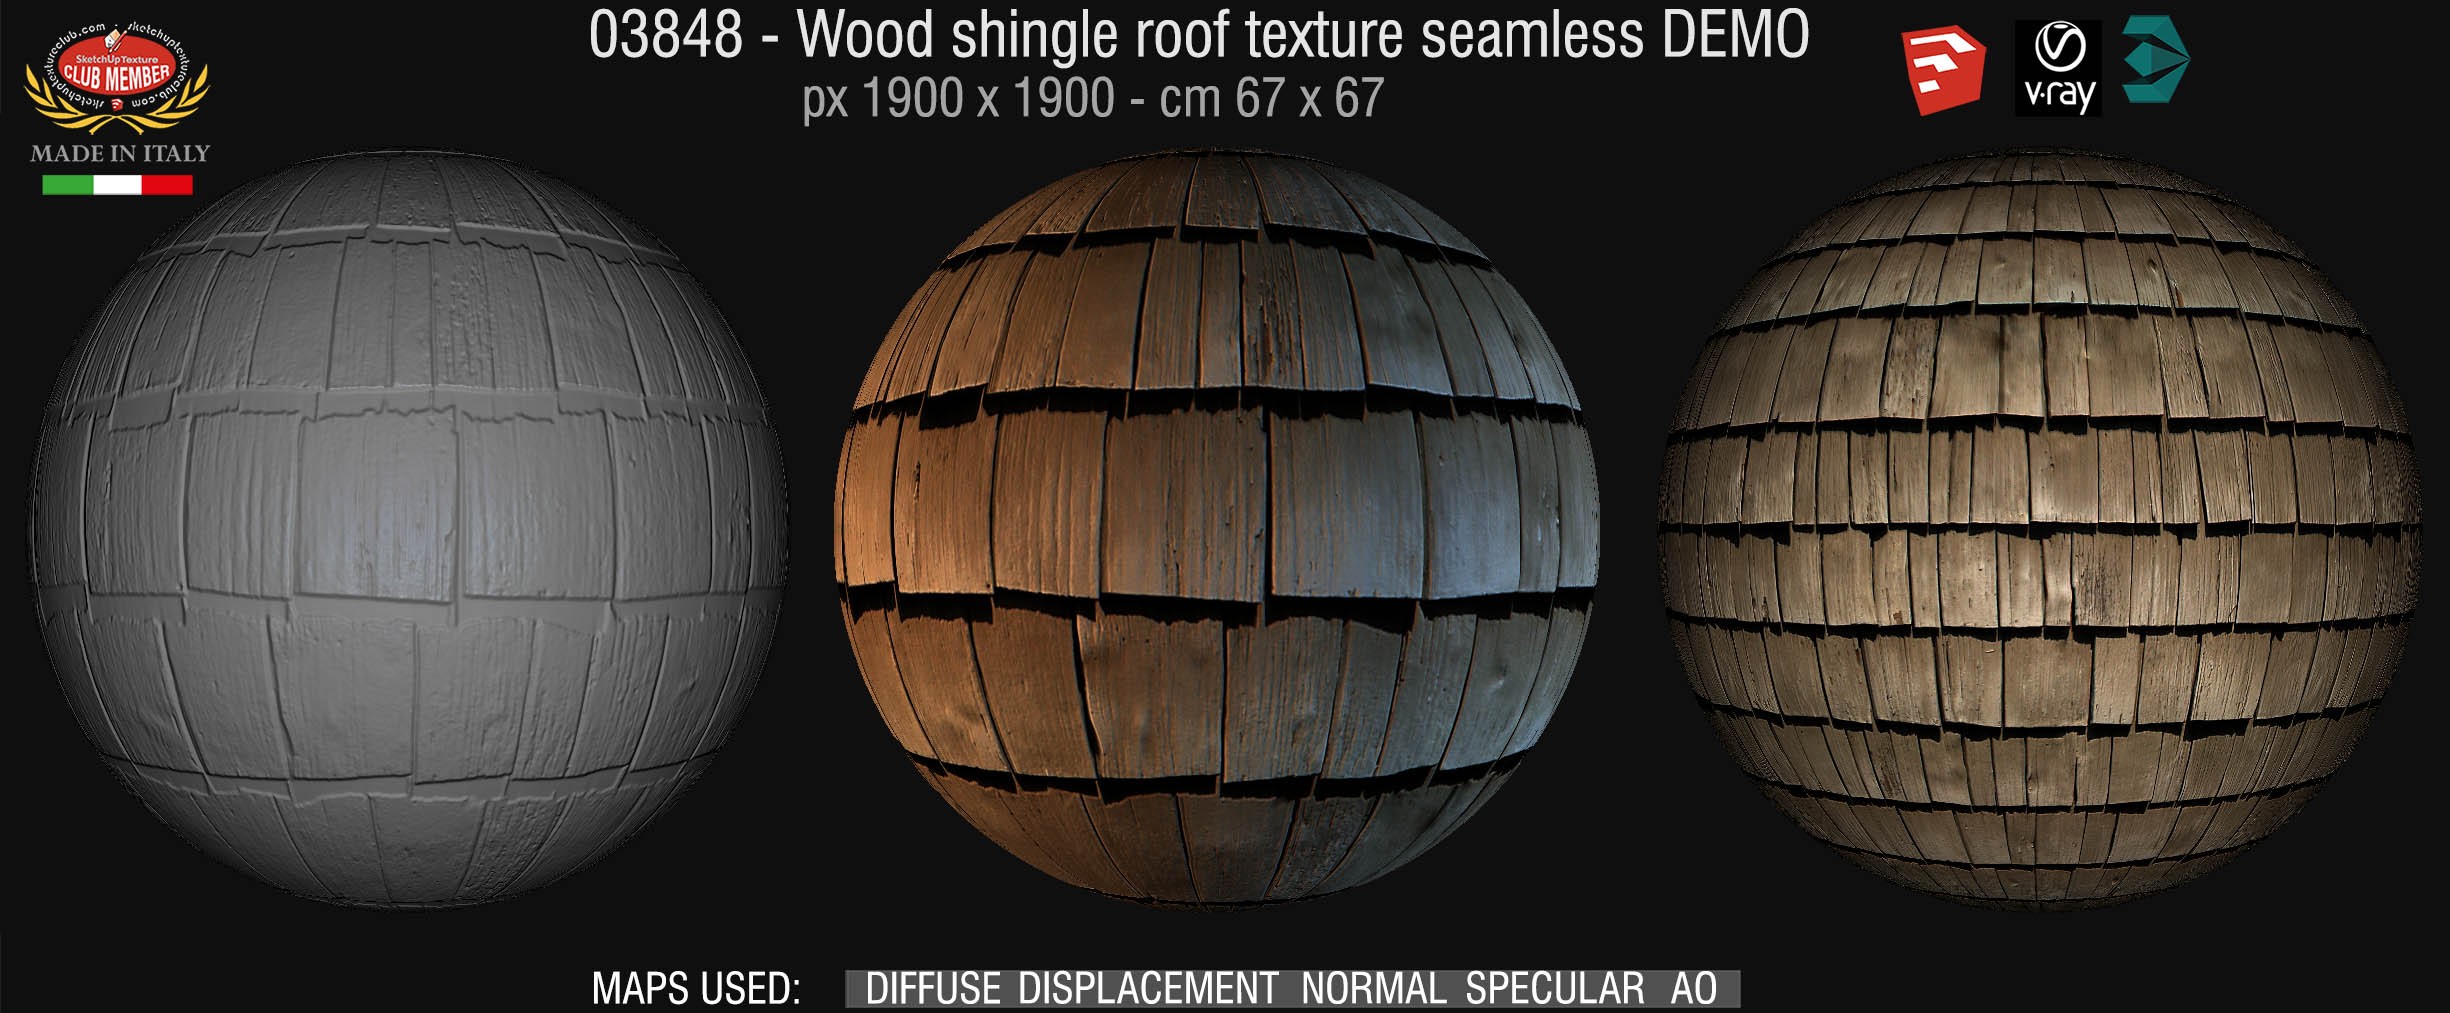 03848 Wood shingle roof texture seamless + maps DEMO